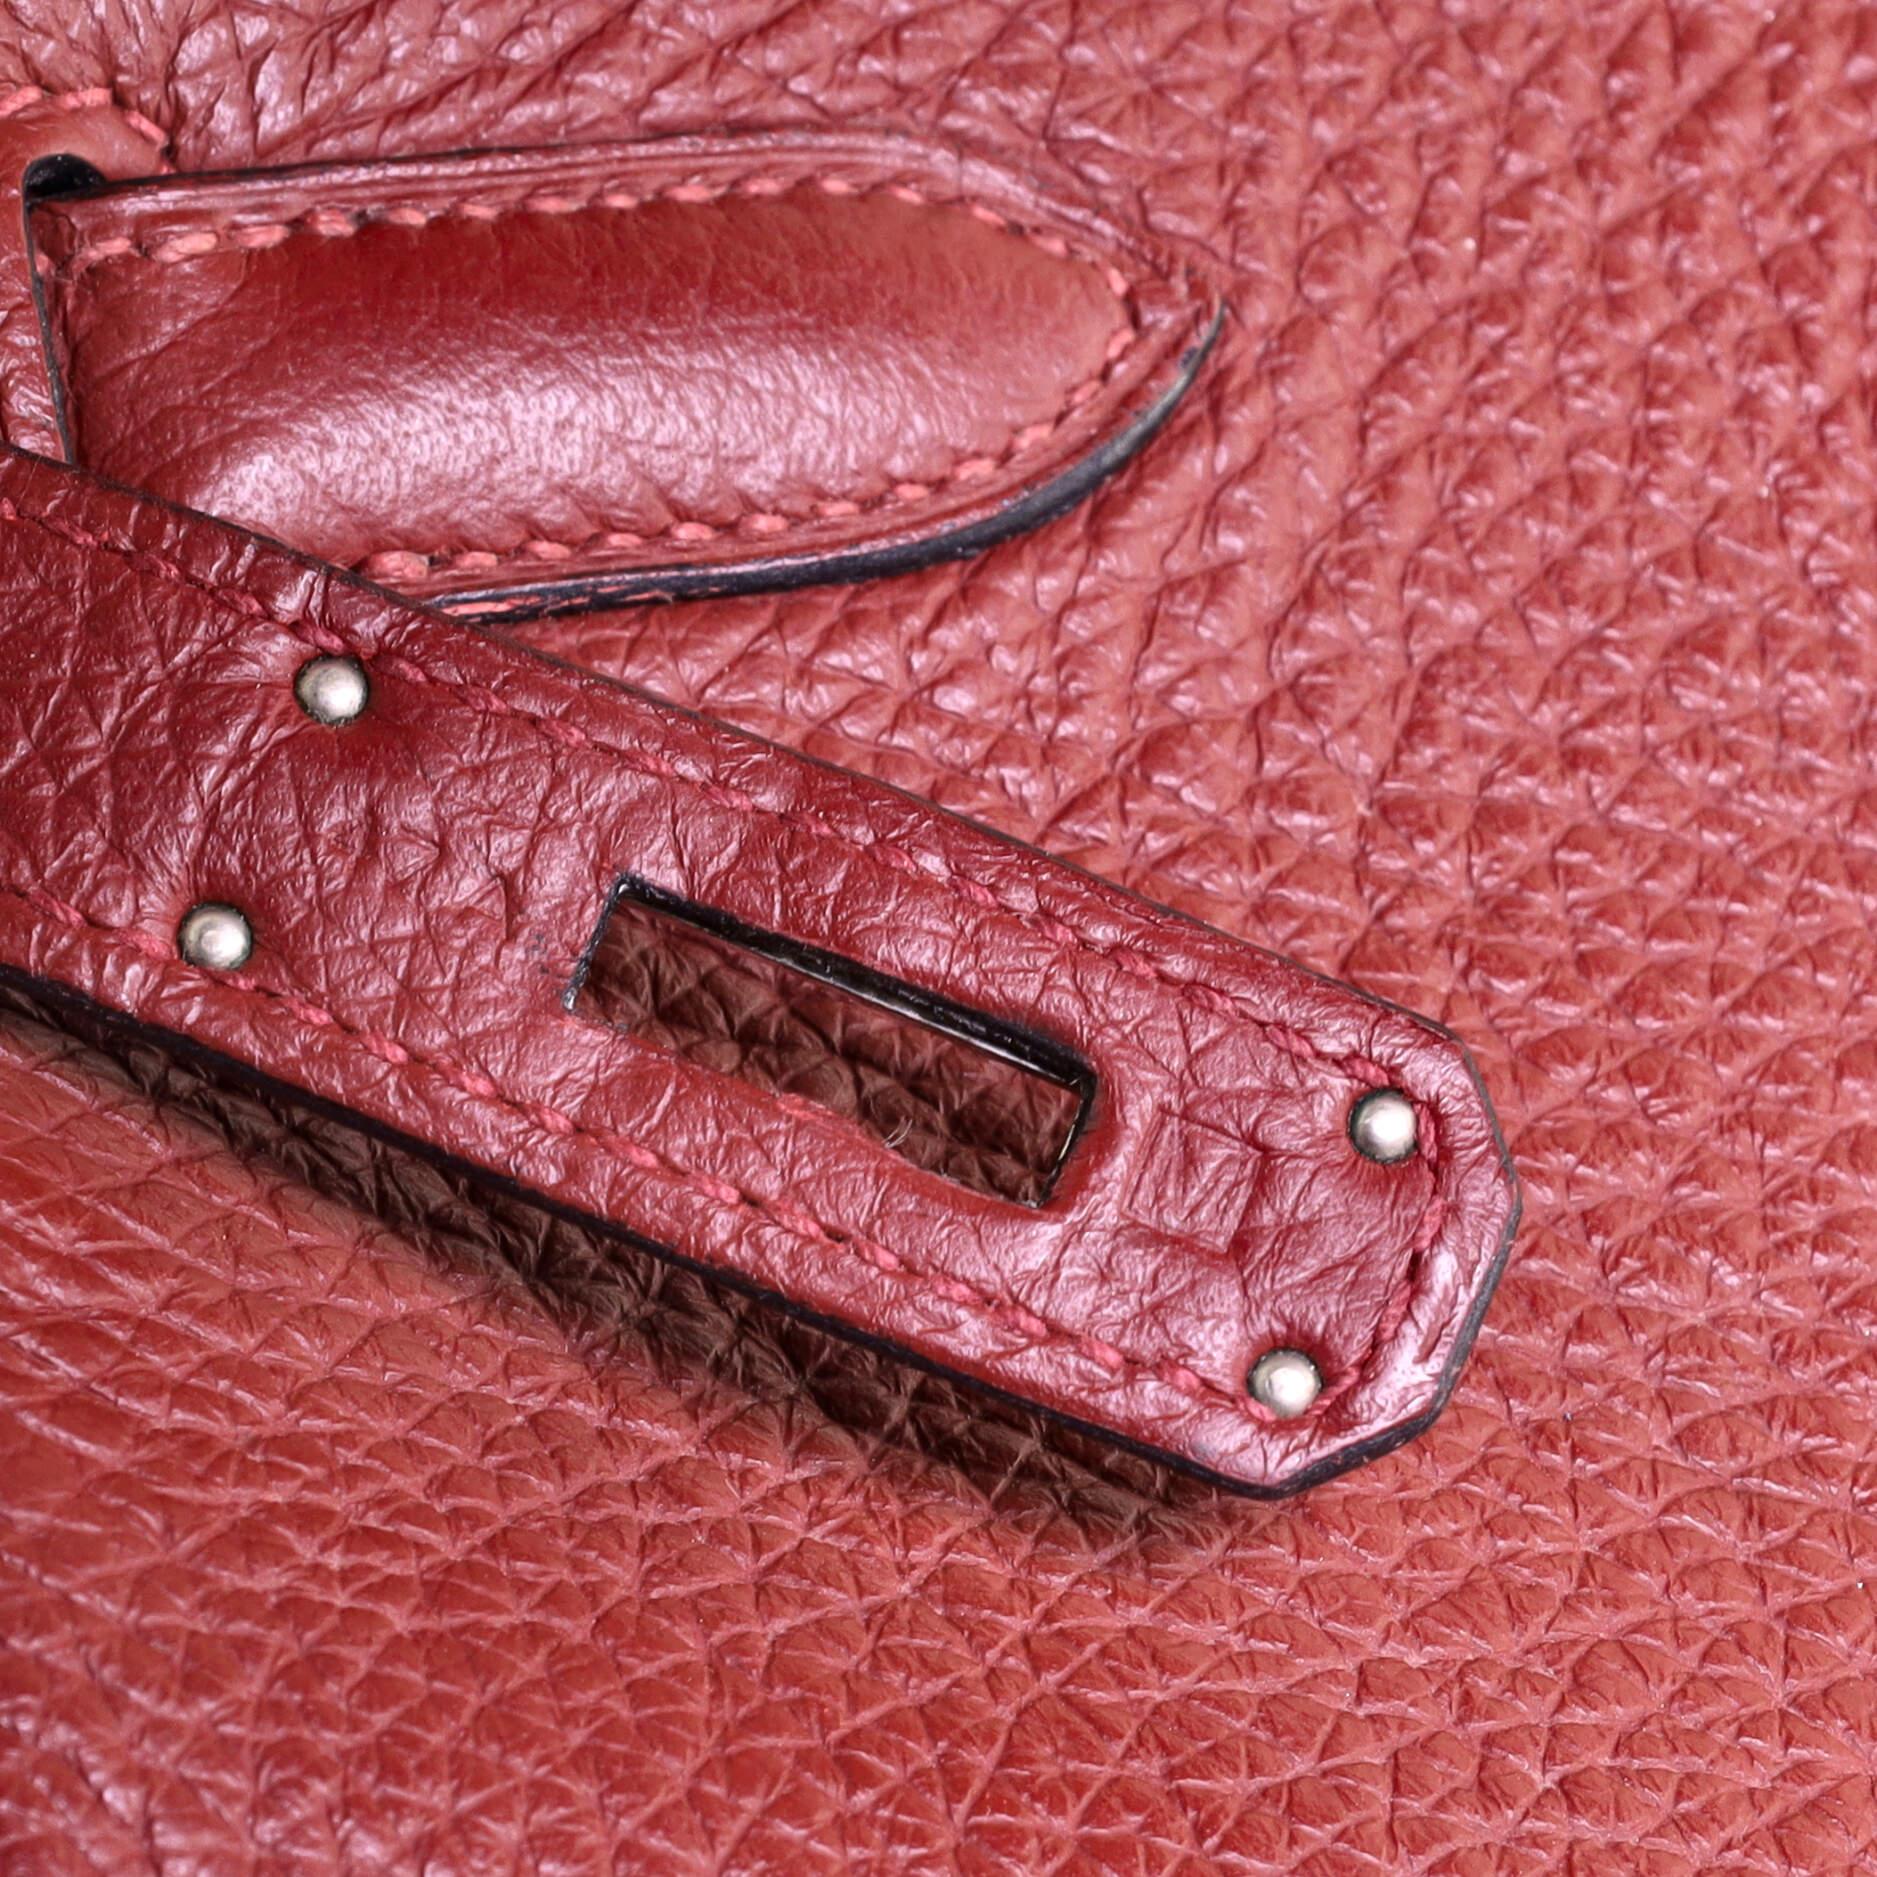 Hermes Birkin Handbag Rouge H Clemence with Palladium Hardware 35 6